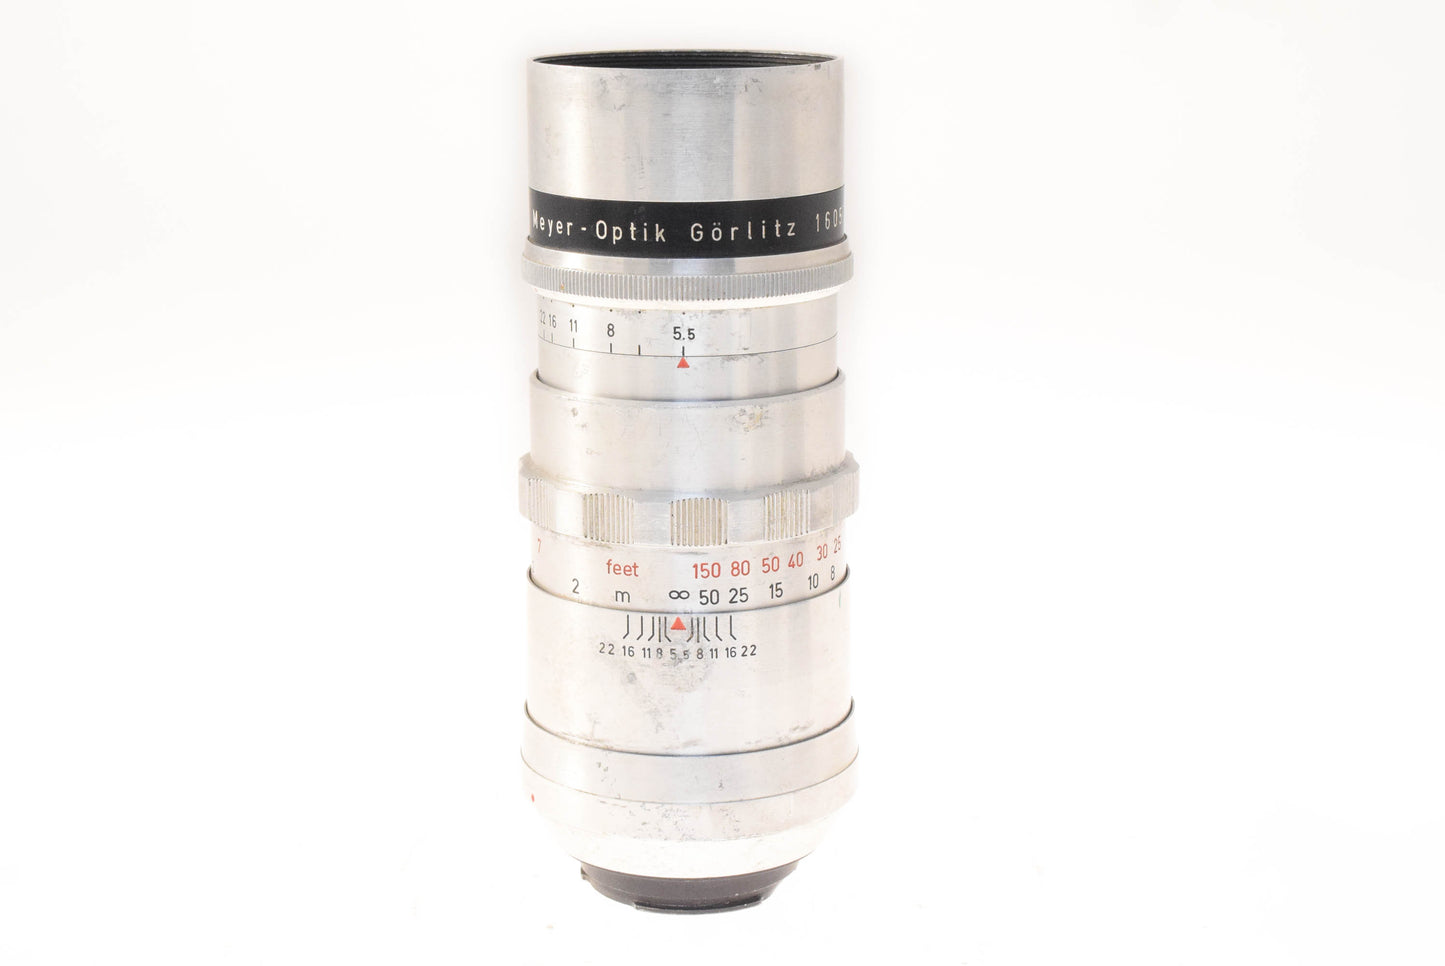 Meyer-Optik Görlitz 180mm f5.5 Telemegor - Lens